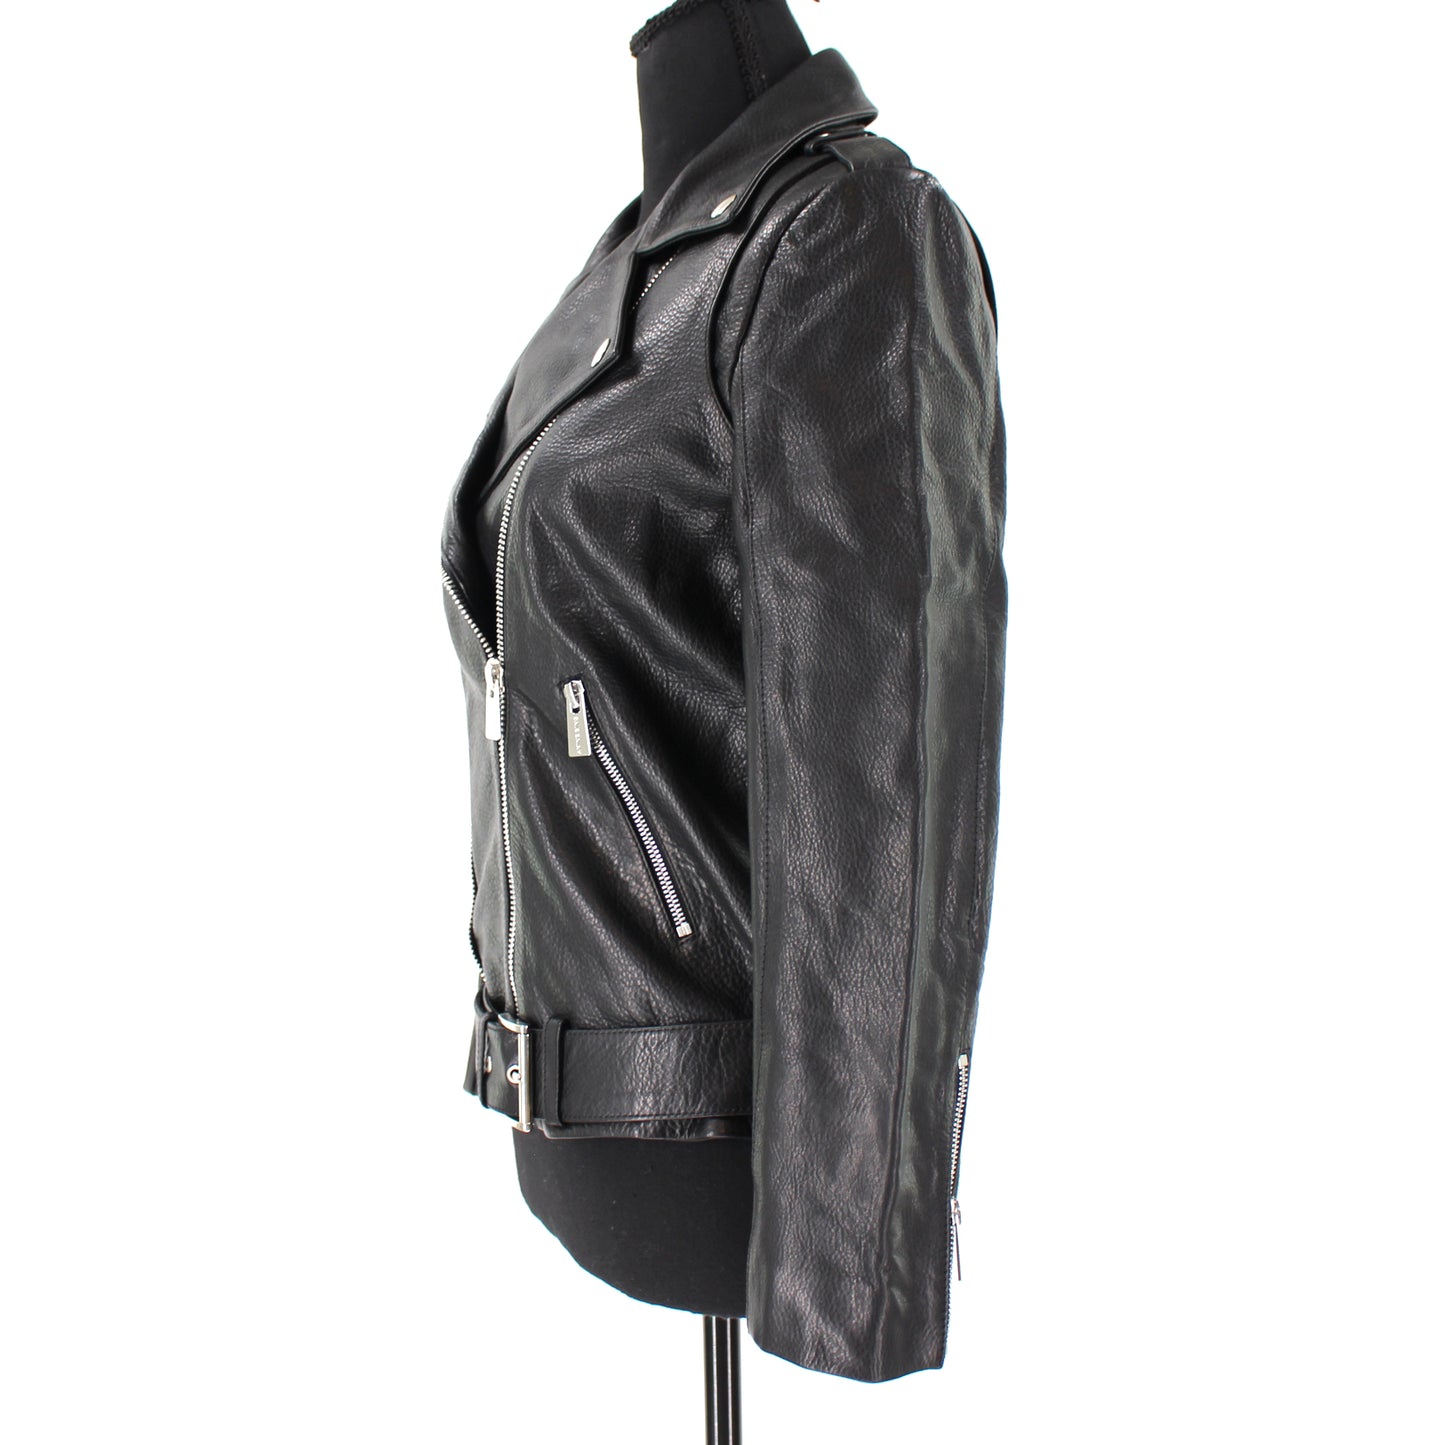 Anine Bing Calf Leather Moto Jacket